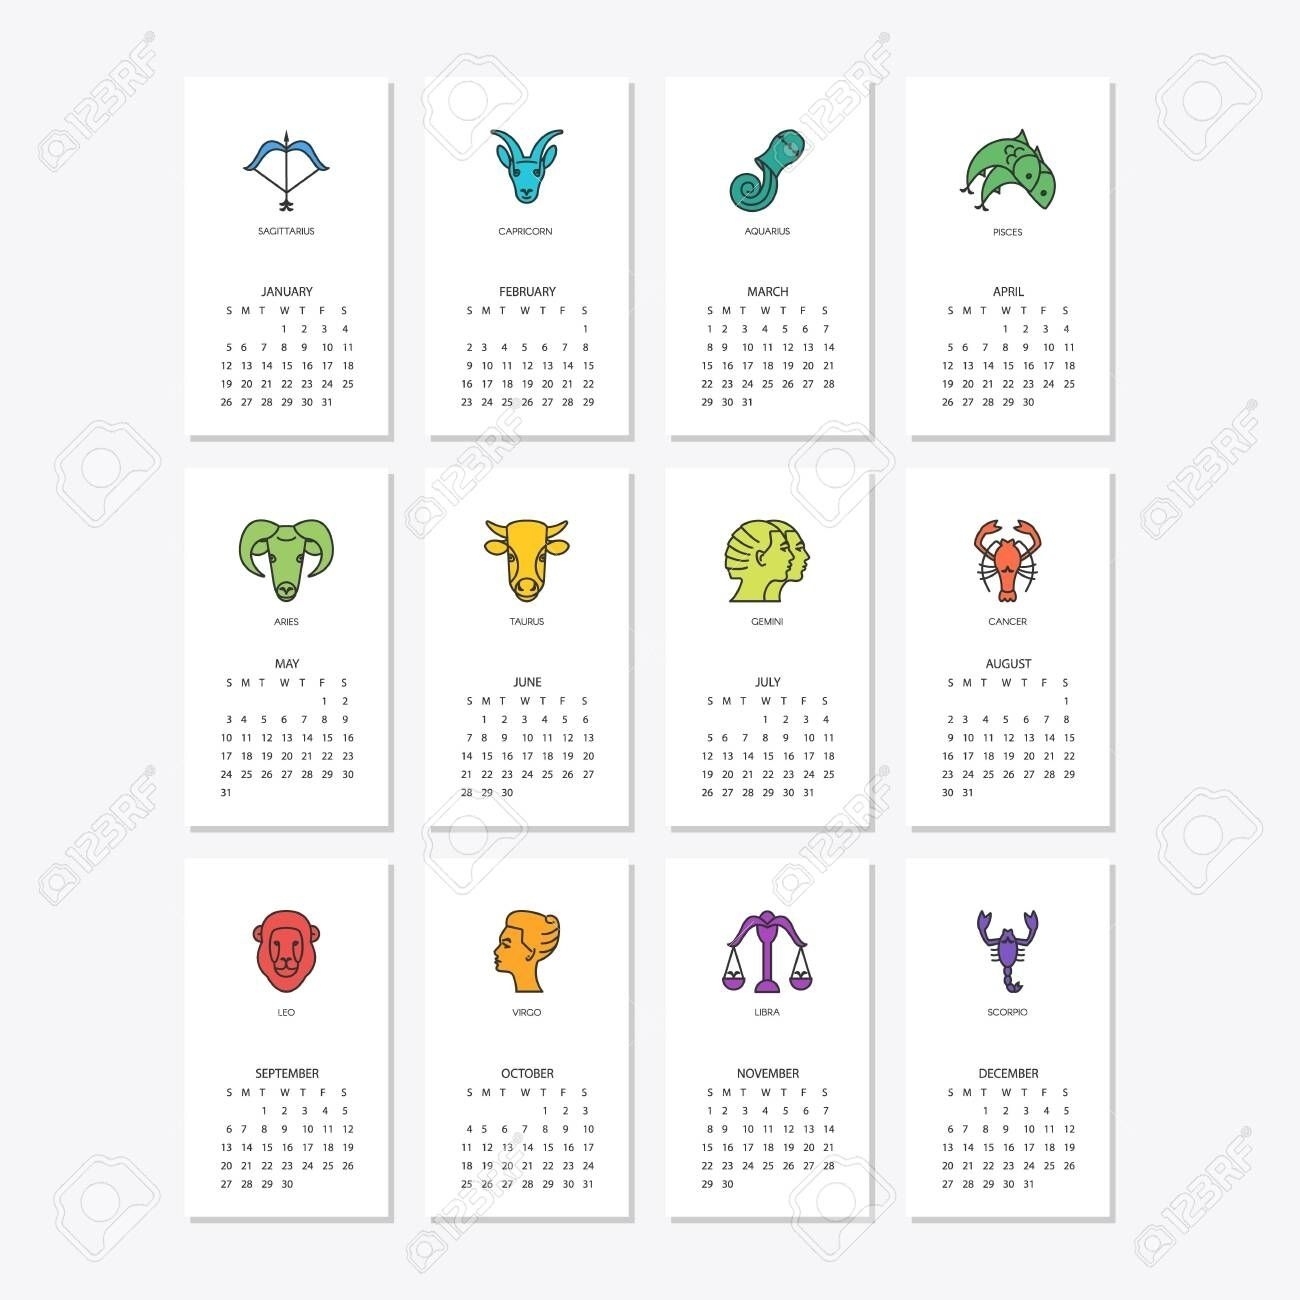 Zodiac Calendar Dates And Signs In 2020 | Zodiac Signs Zodiac Calendar With Dates